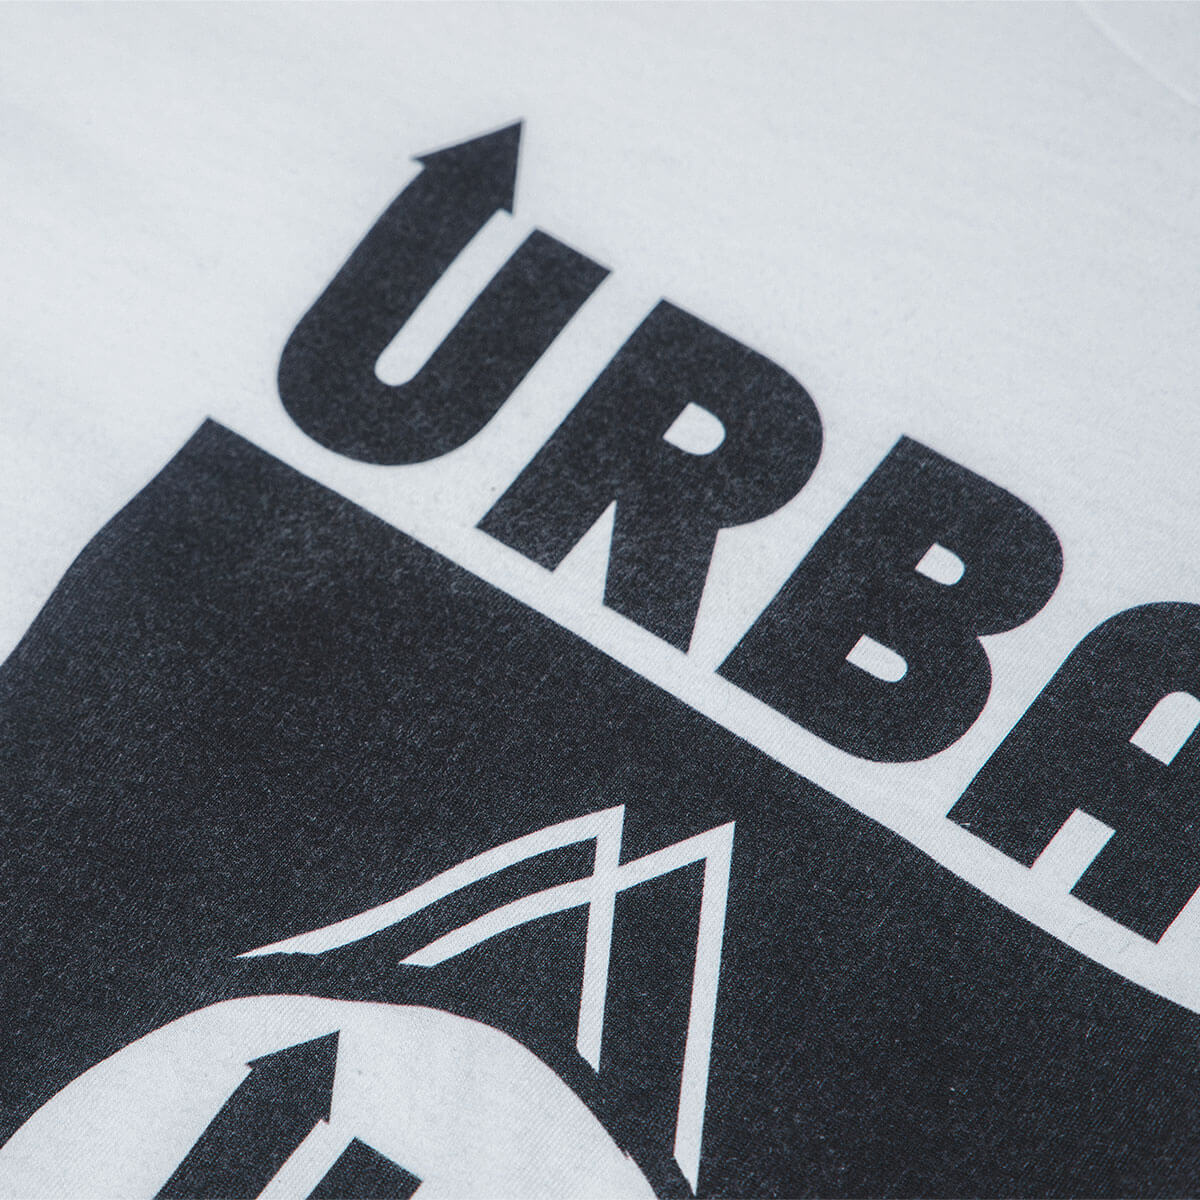 Urban Move, Streetwear Store, Logo T-Shirt